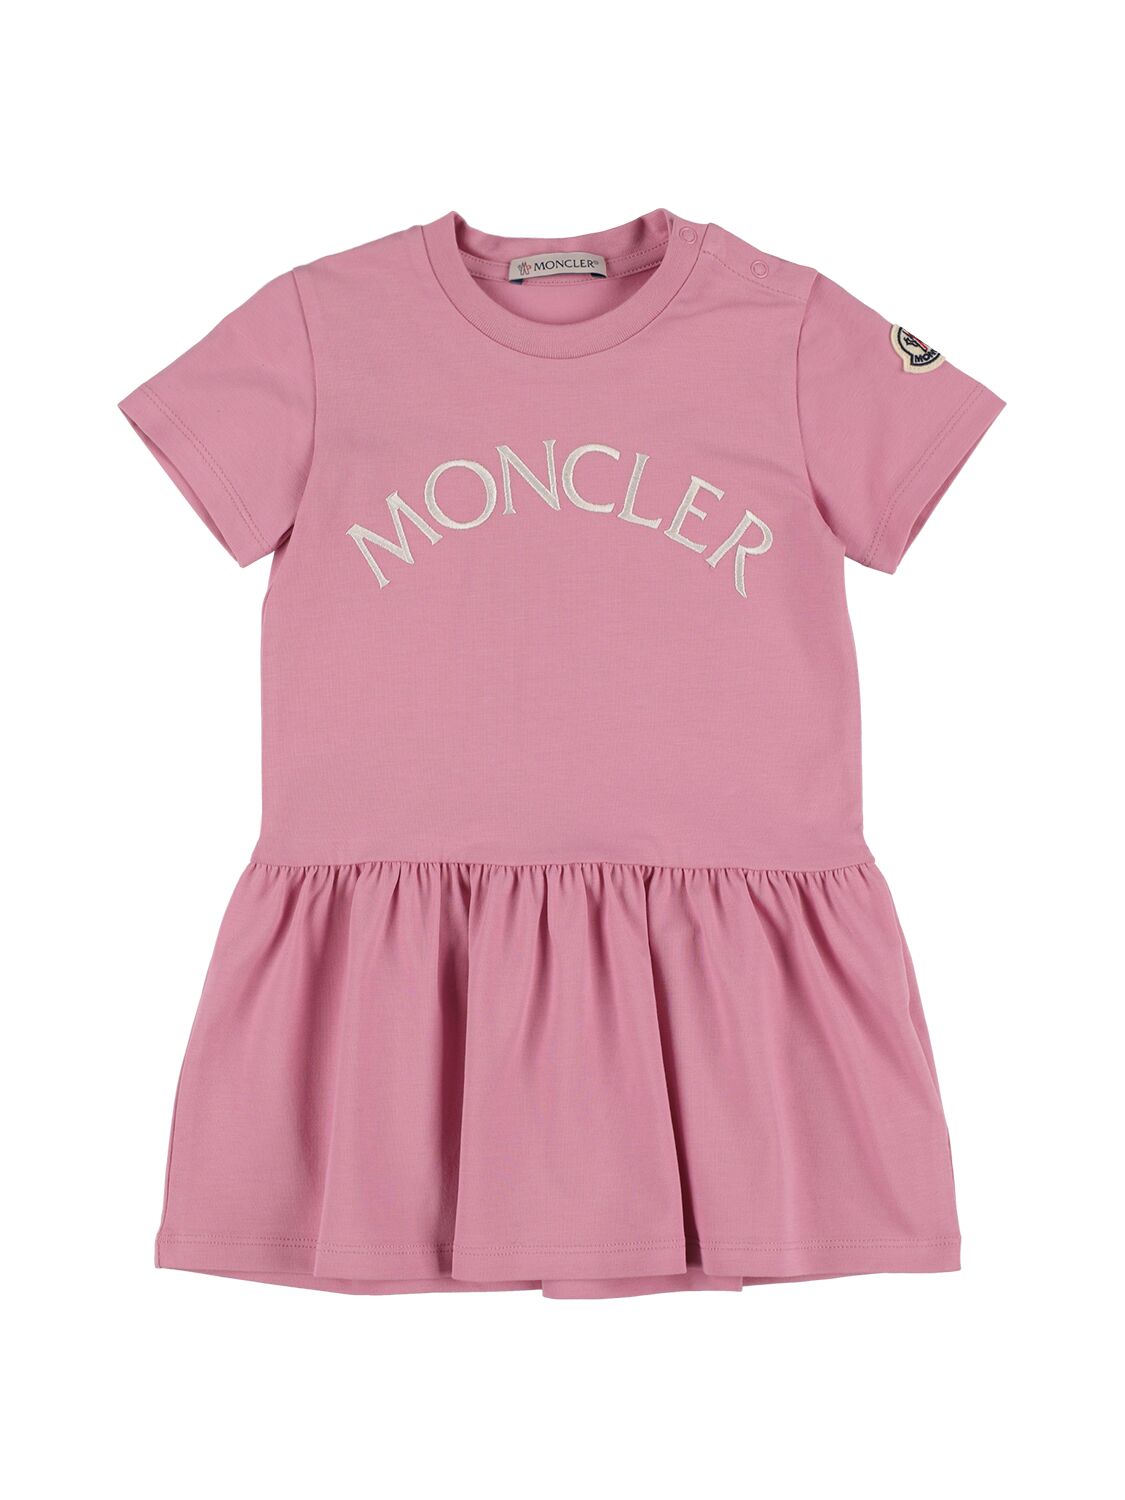 Moncler Kids' Cotton Jersey Dress In Fuchsia